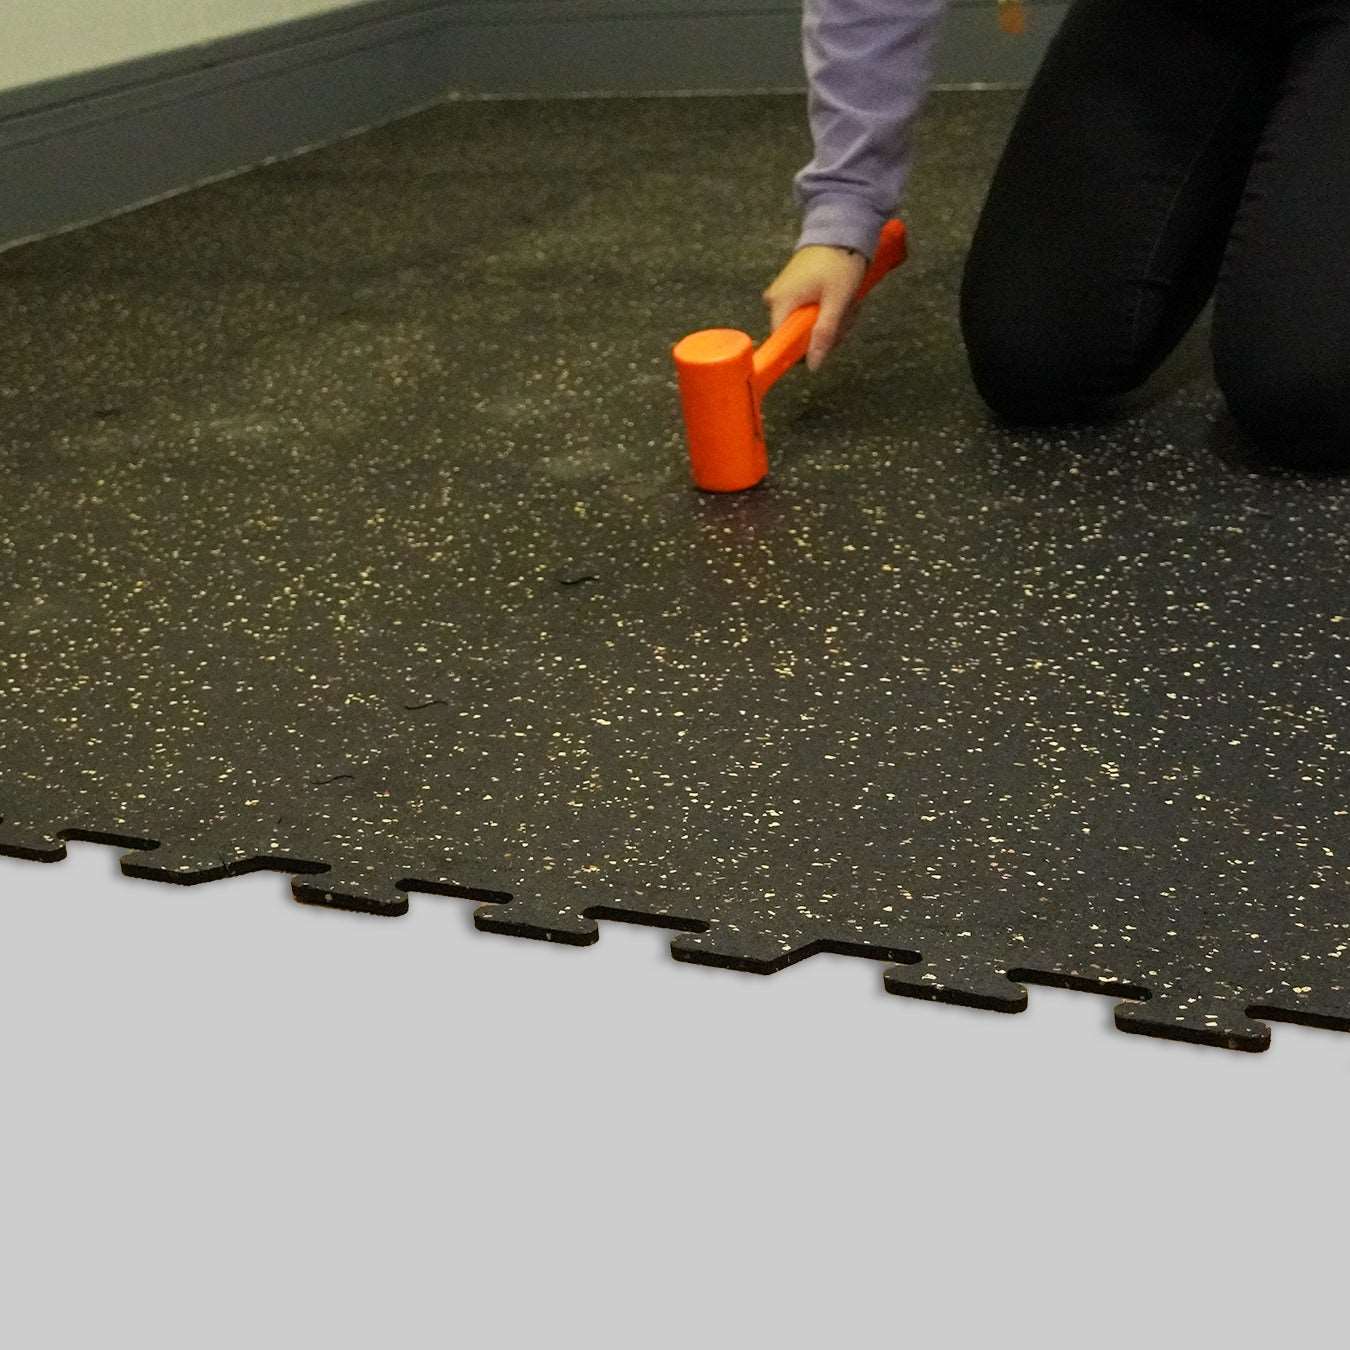 co-1-2-intense-interlocking-rubber-floor-tile